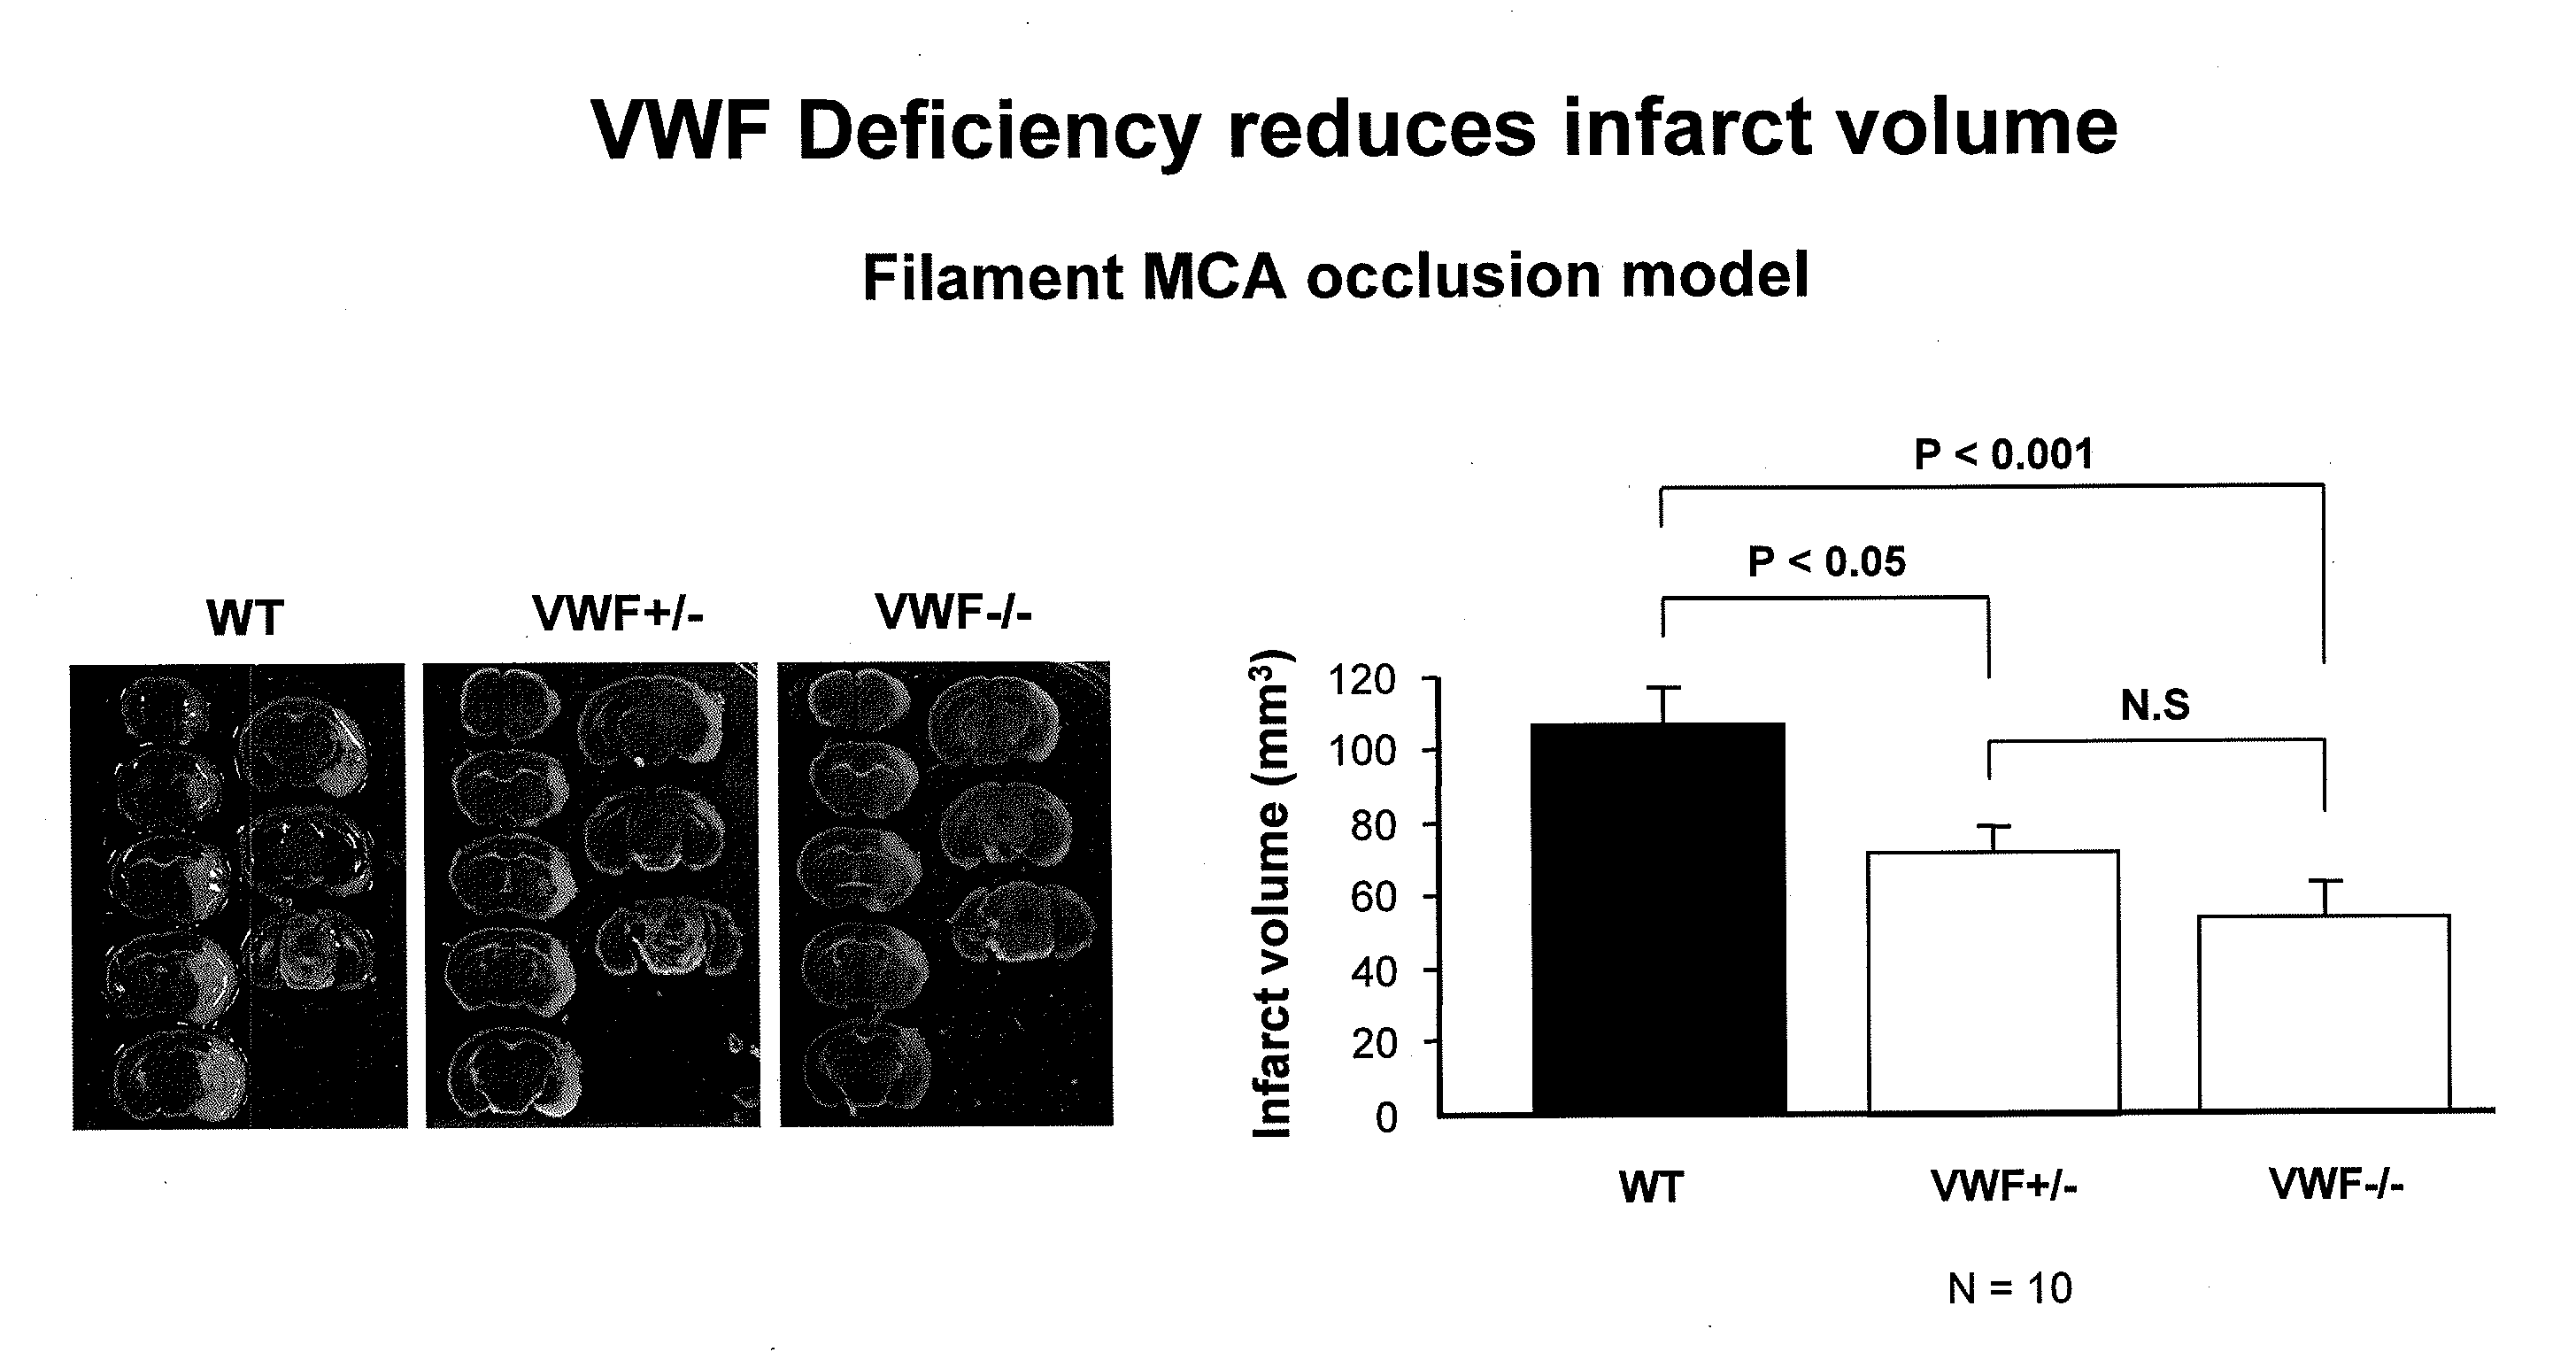 Von willebrand factor (VWF) inhibitors for treatment or prevention of infarction